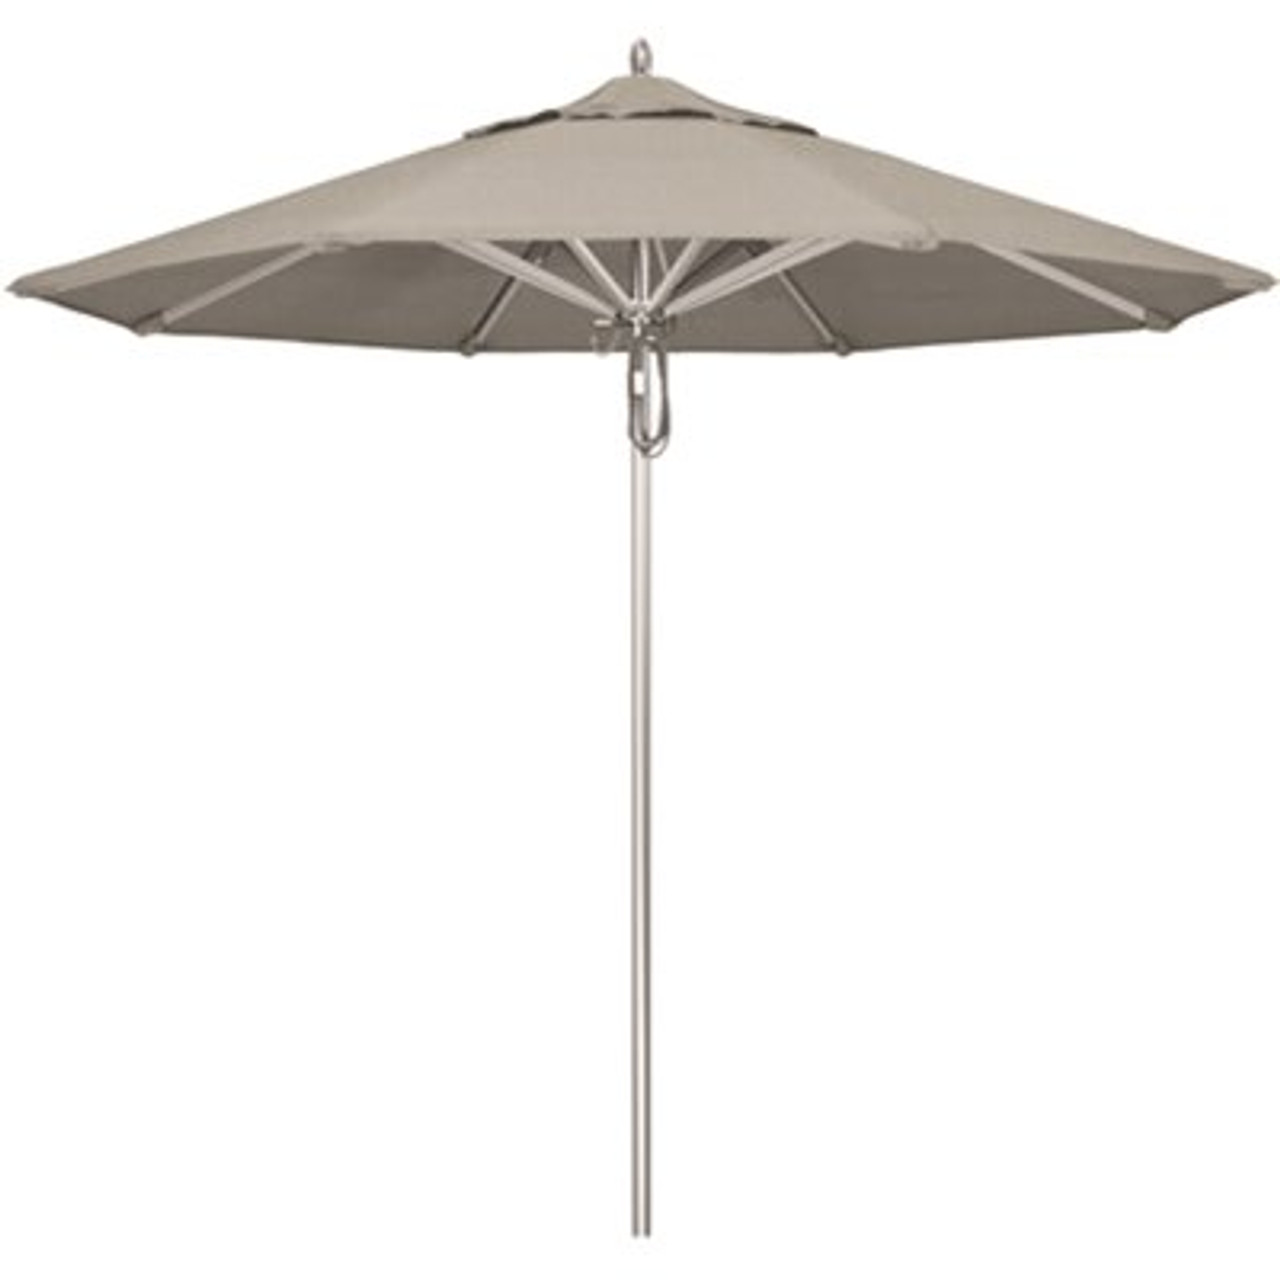 California Umbrella 9 ft. Silver Aluminum Commercial Market Patio Umbrella with Pulley Lift in Granite Sunbrella